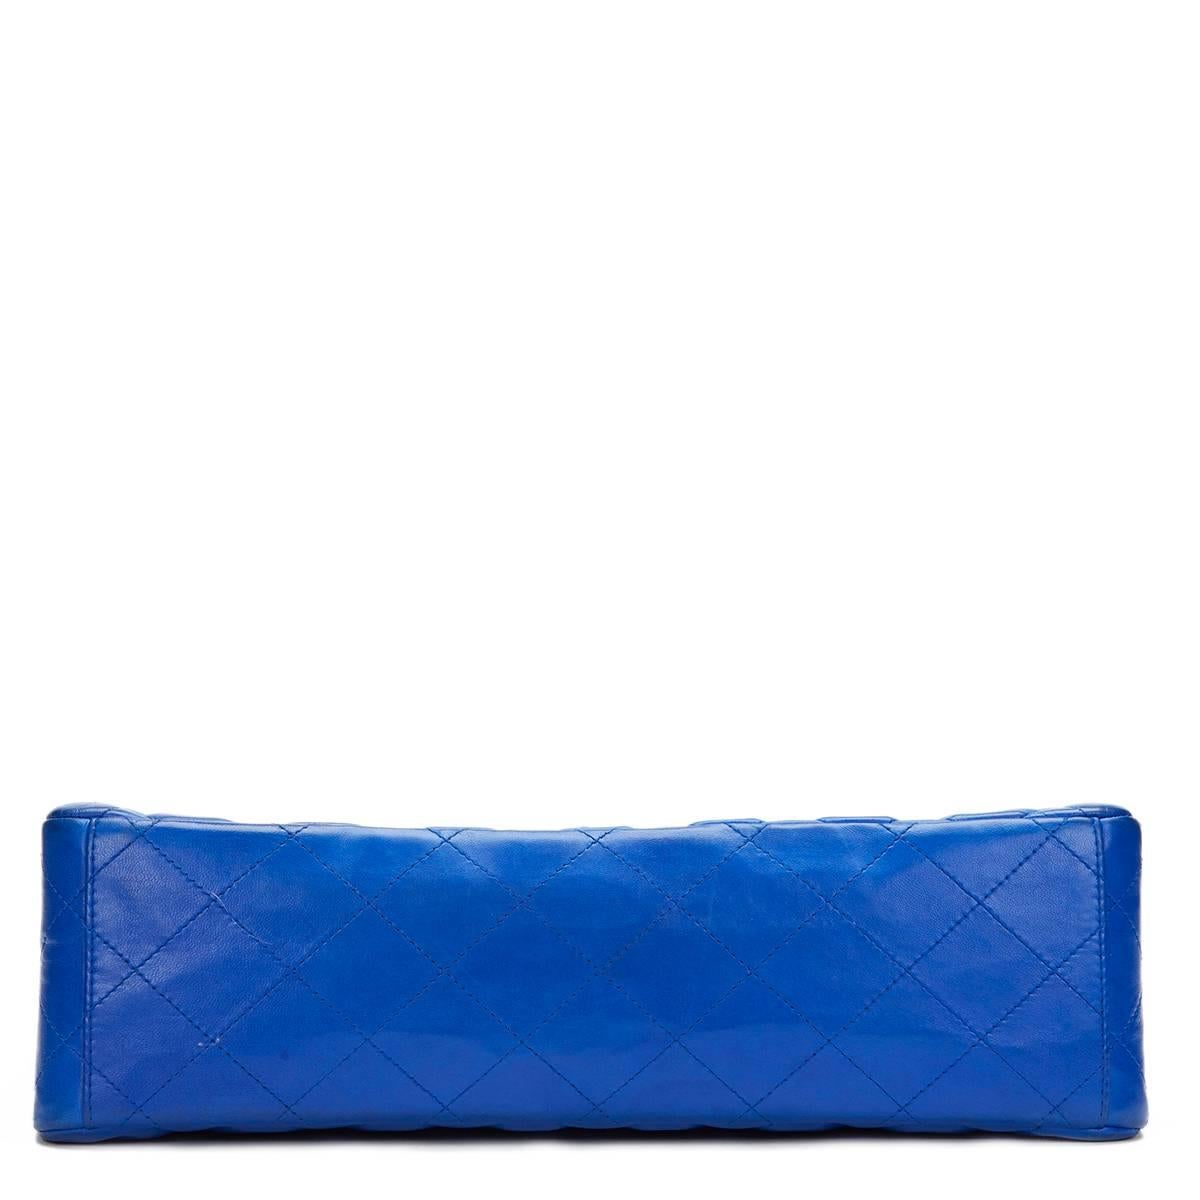 2000s Chanel Electric Blue Maxi Classic Single Flap Bag 1